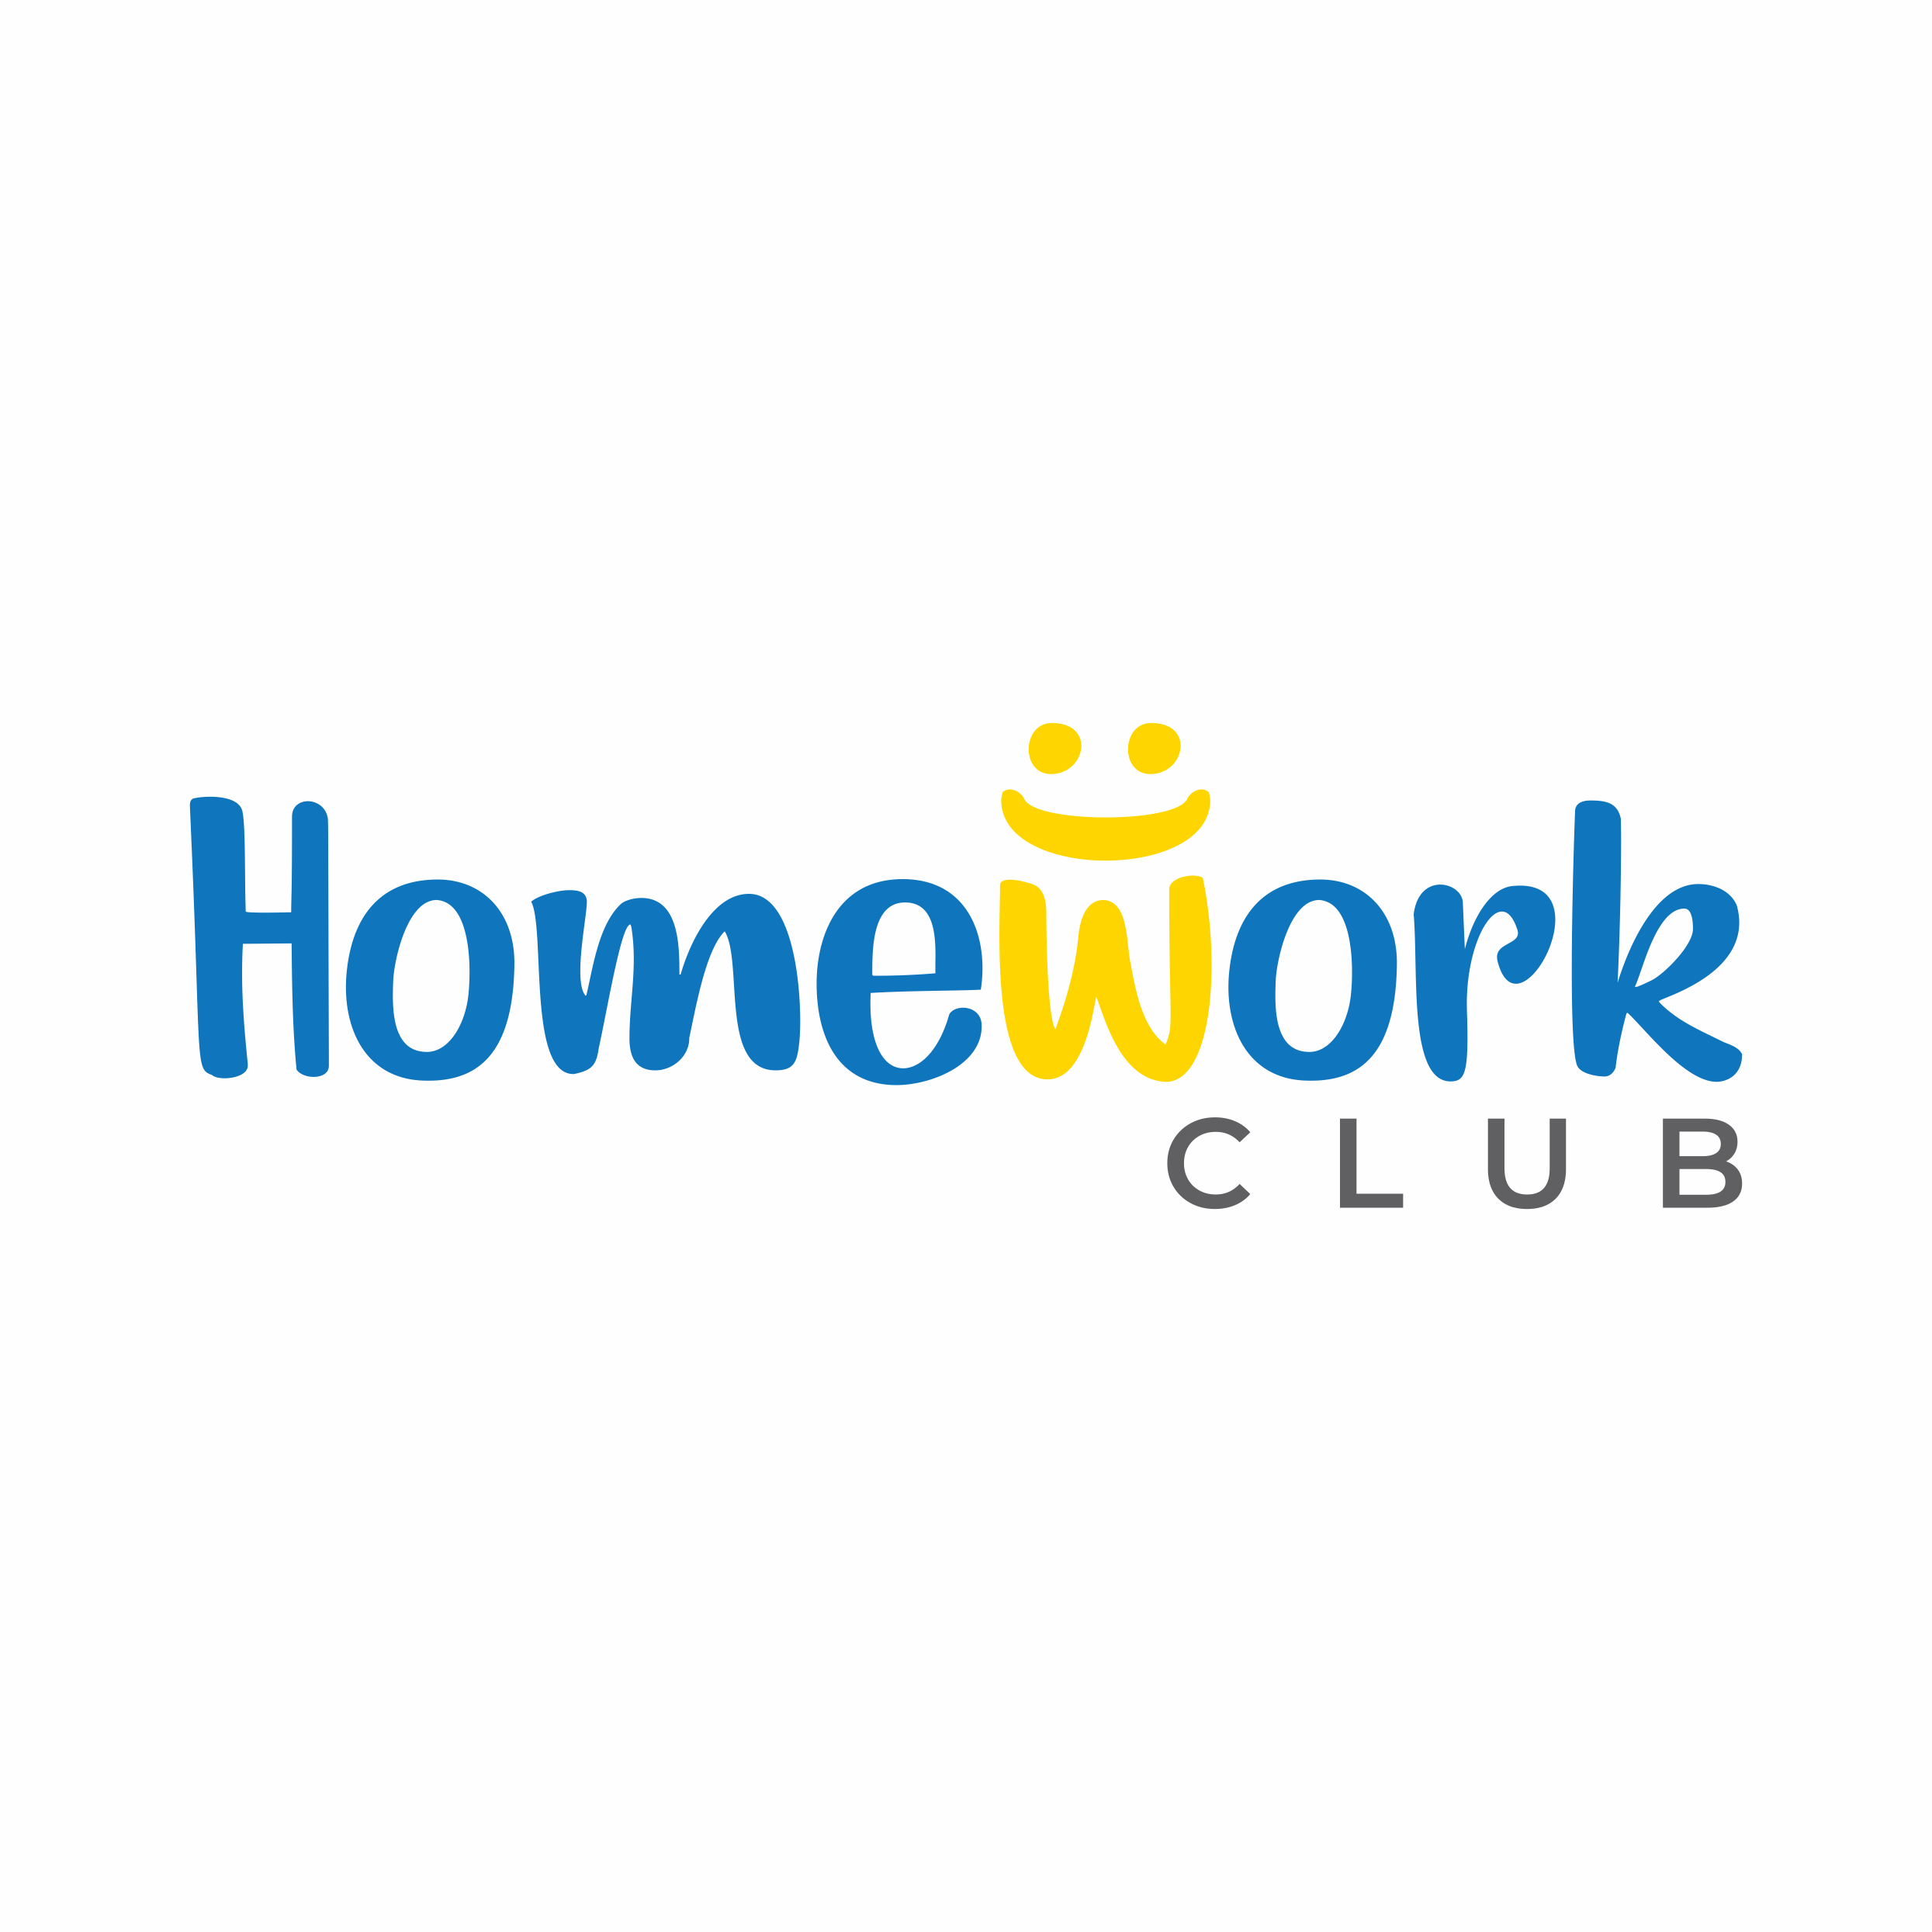 Homework Club - Do you want to get involved?